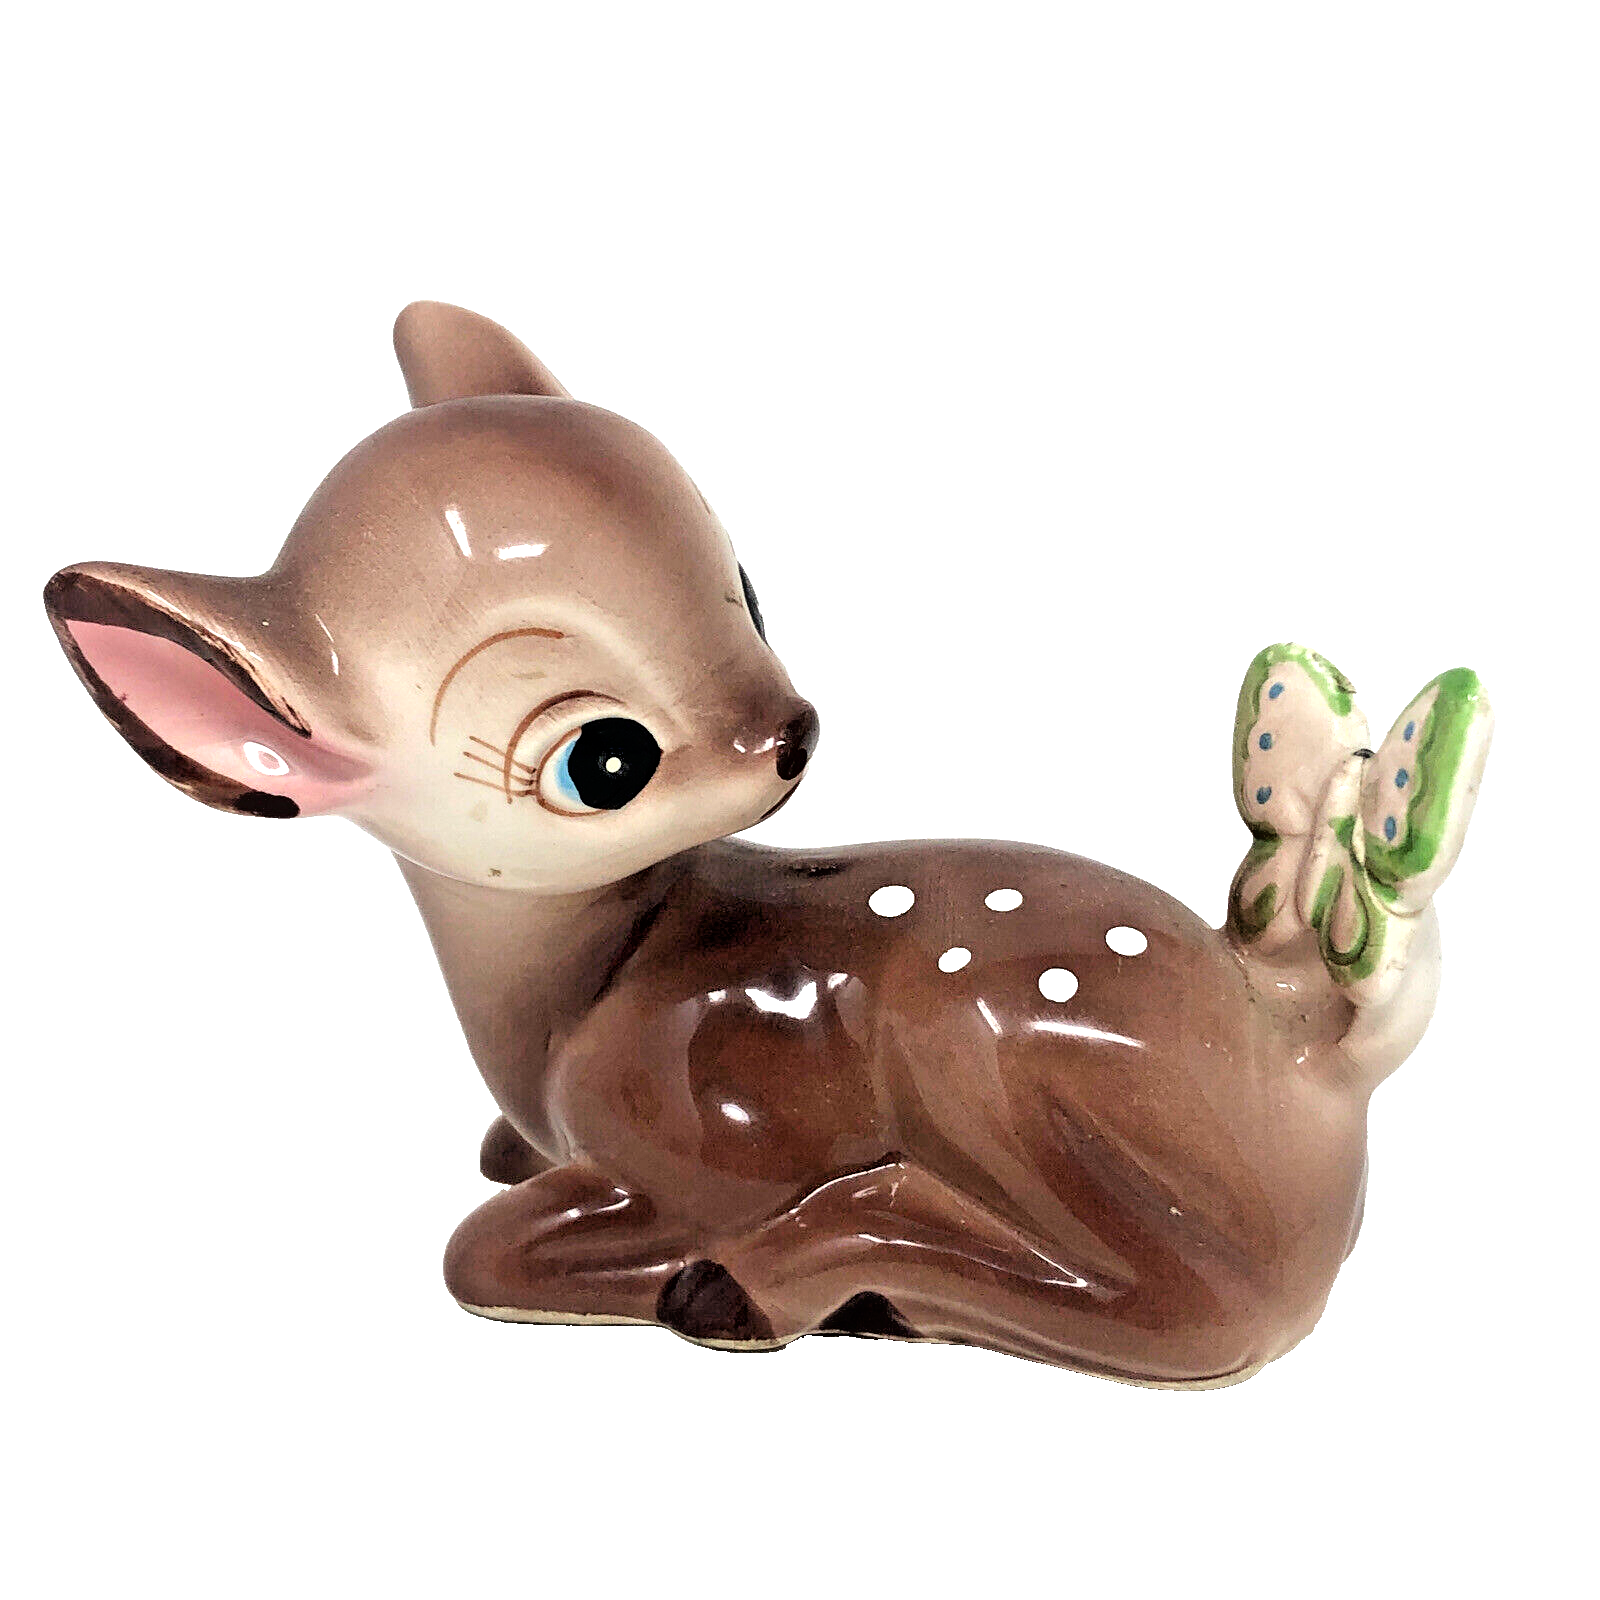 RARE Vintage Bambi Butterfly Figurine Laying Ceramic Porcelain UCGC Japan Disney - $55.00